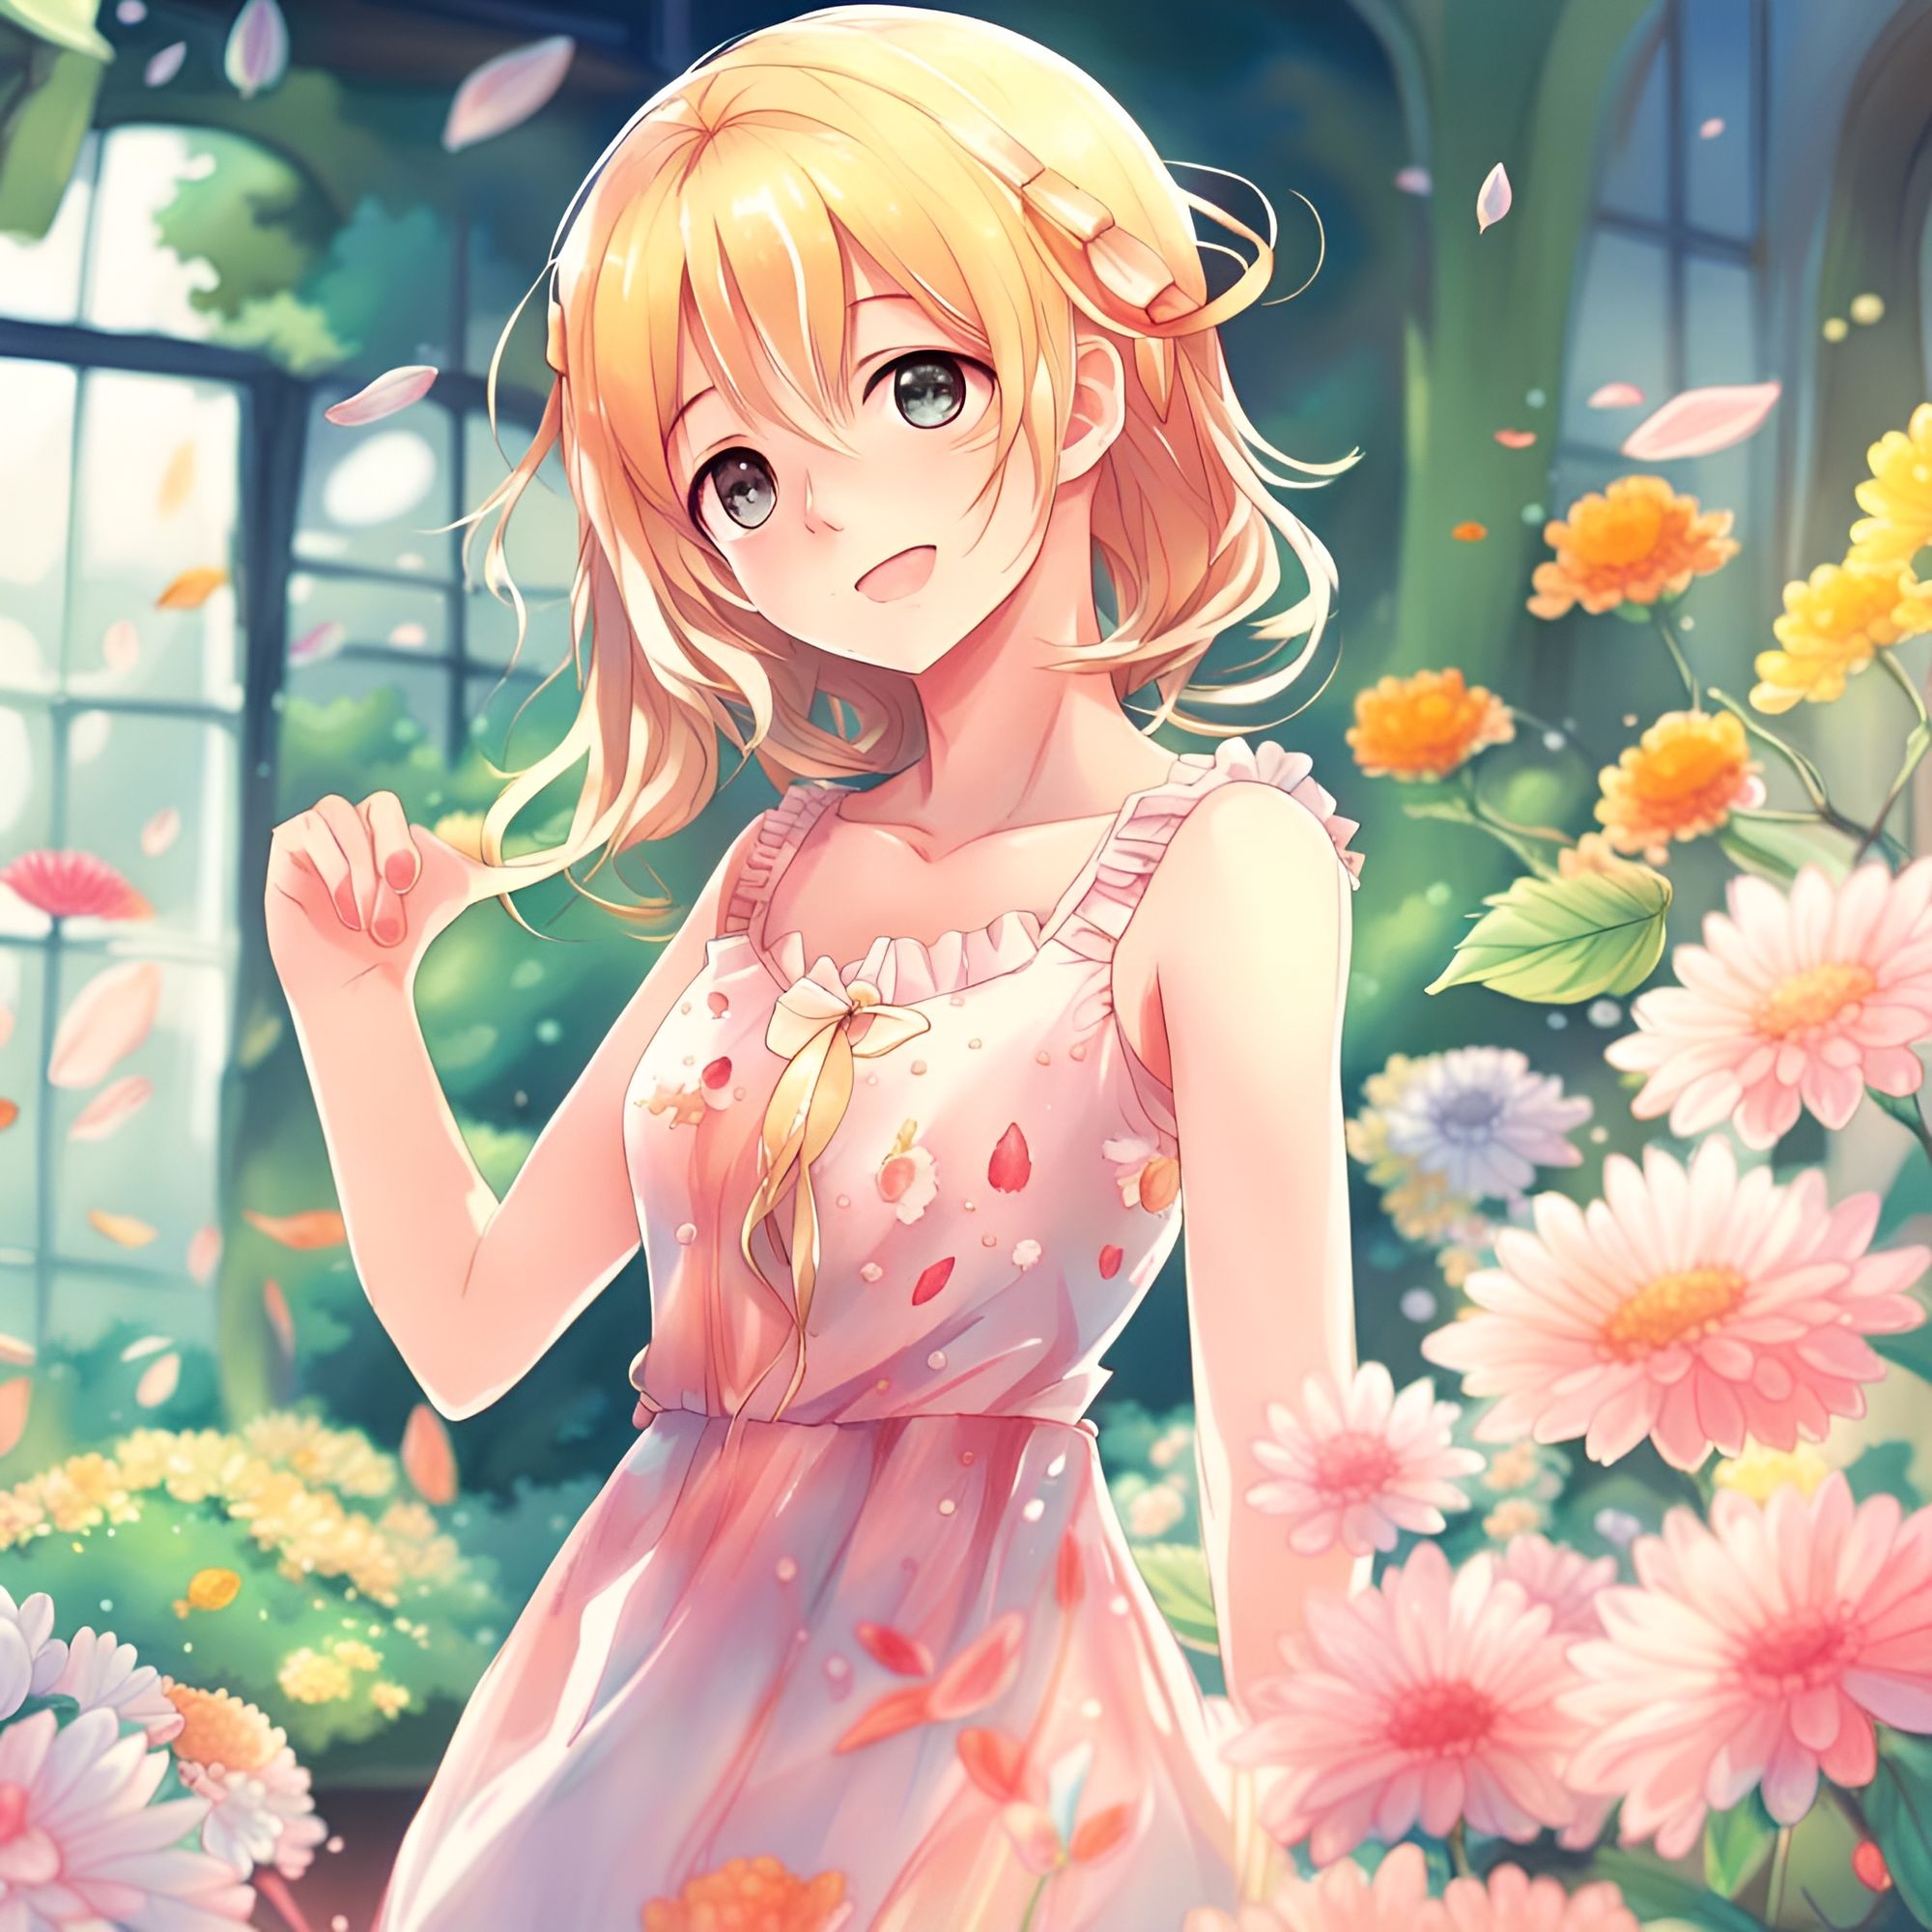 Download Cute Anime Girl Fancy Pink Dress Wallpaper | Wallpapers.com